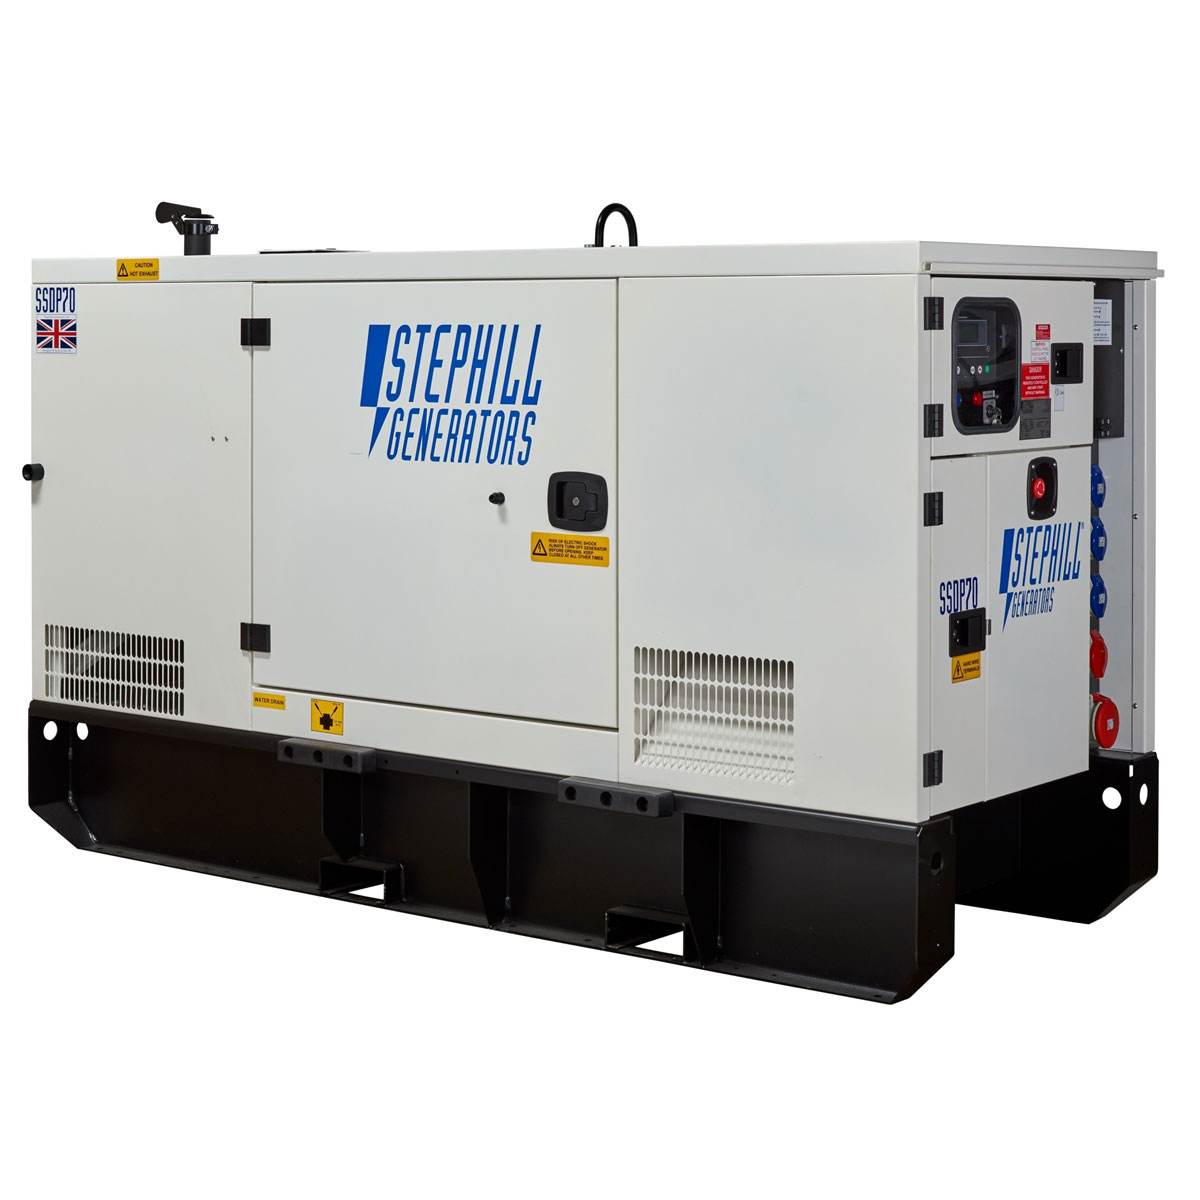 Stephill SSDP70 Super Silent 3-Phase Diesel Generator